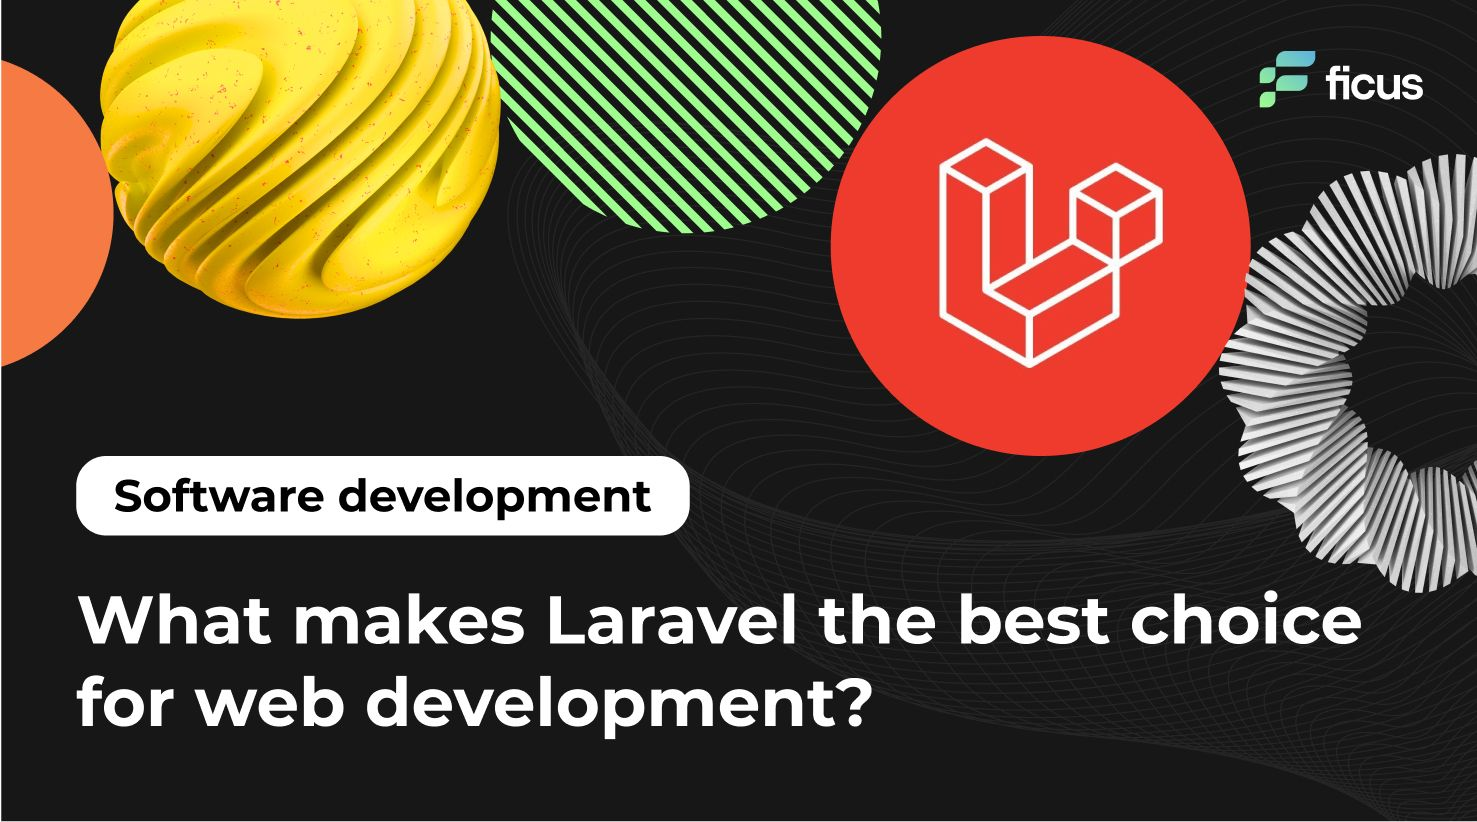 Laravel web development services: What makes Laravel the best choice for web development?